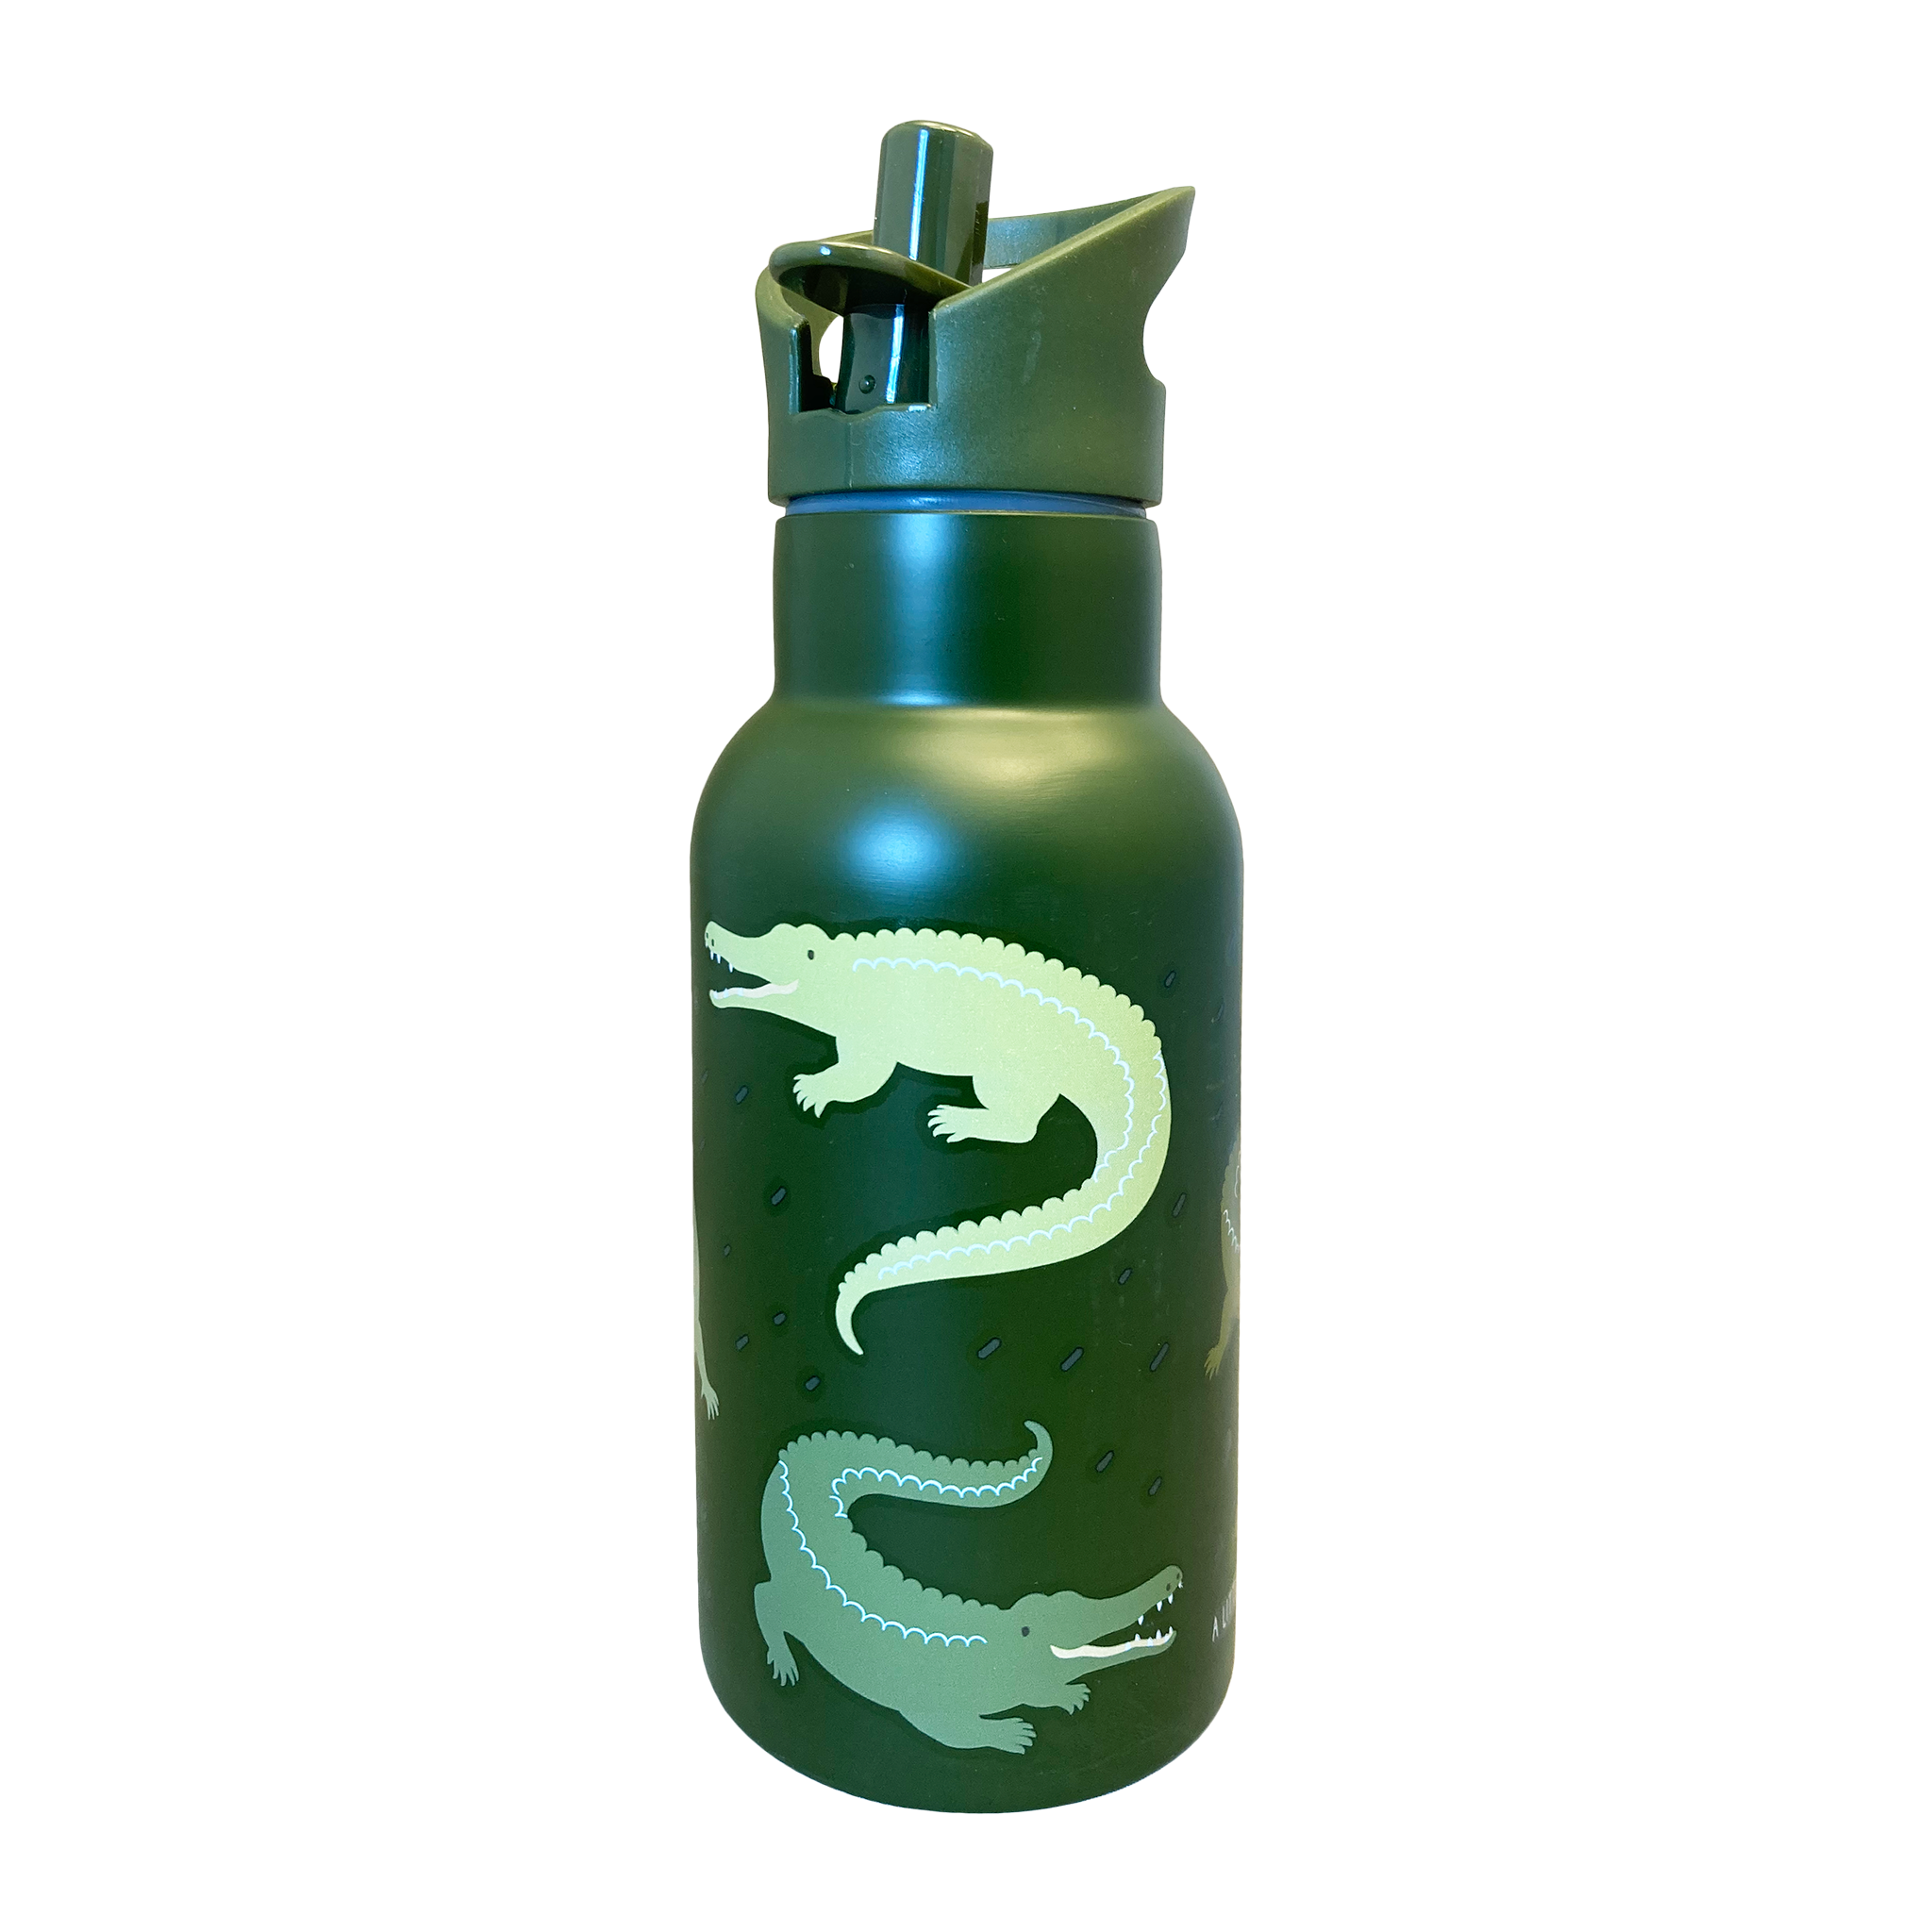 Stainless Steel Alligator Water Bottle